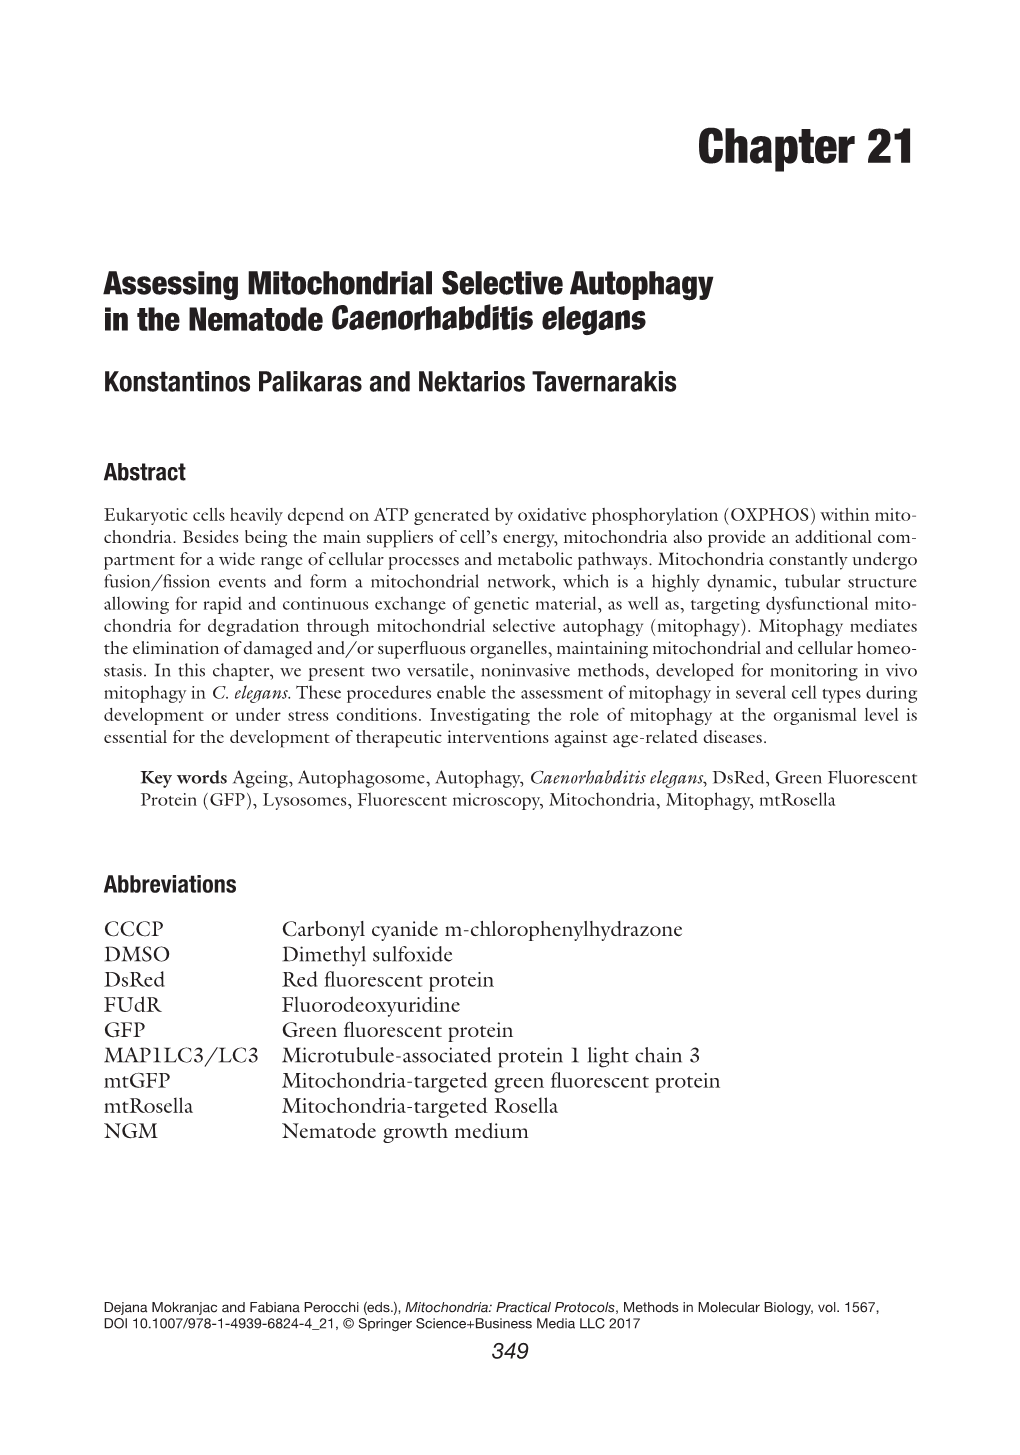 Assessing Mitochondrial Selective Autophagy in the Nematode Caenorhabditis Elegans